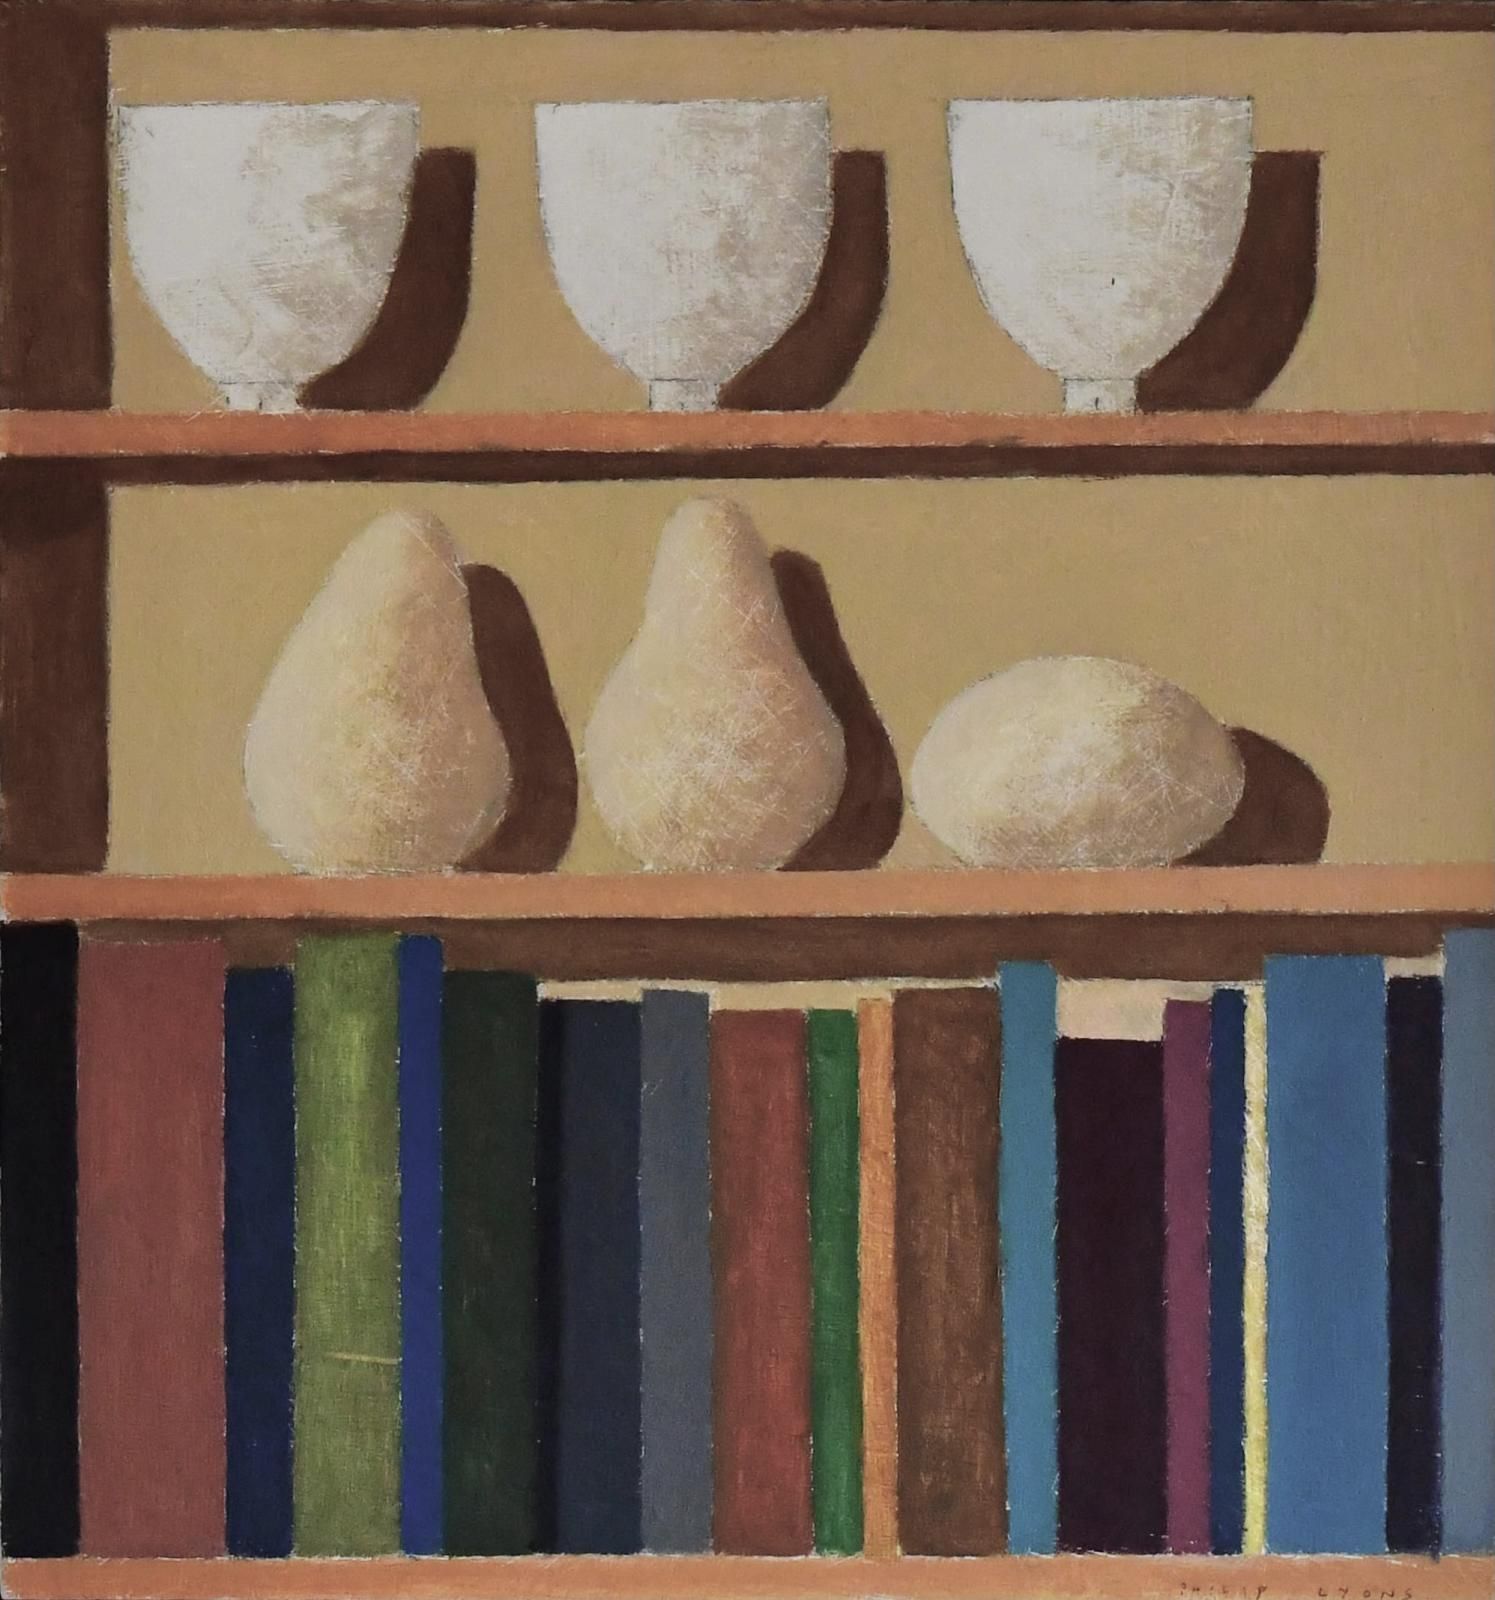 Three Bowls - Three Gourds - Twenty Books by Philip Lyons